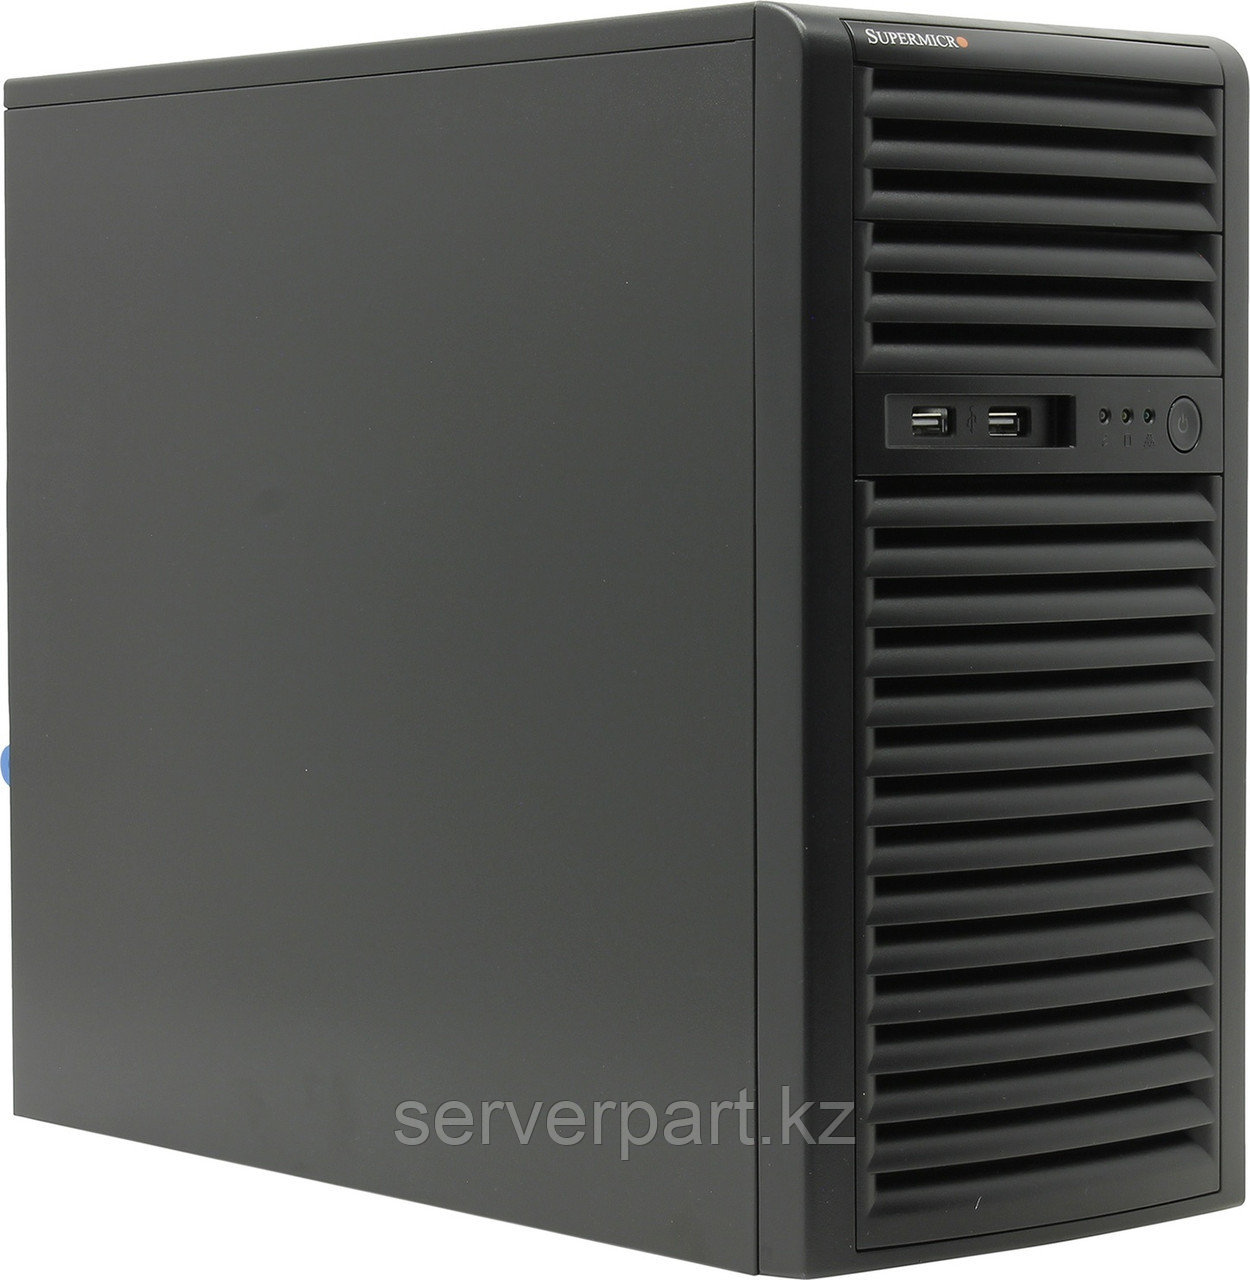 Сервер Supermicro SYS-5039C Tower 4LFF/4-core intel xeon E2124 3.3GHz/32GB UDIMM nECC/1x480GB SSD MU Hyb